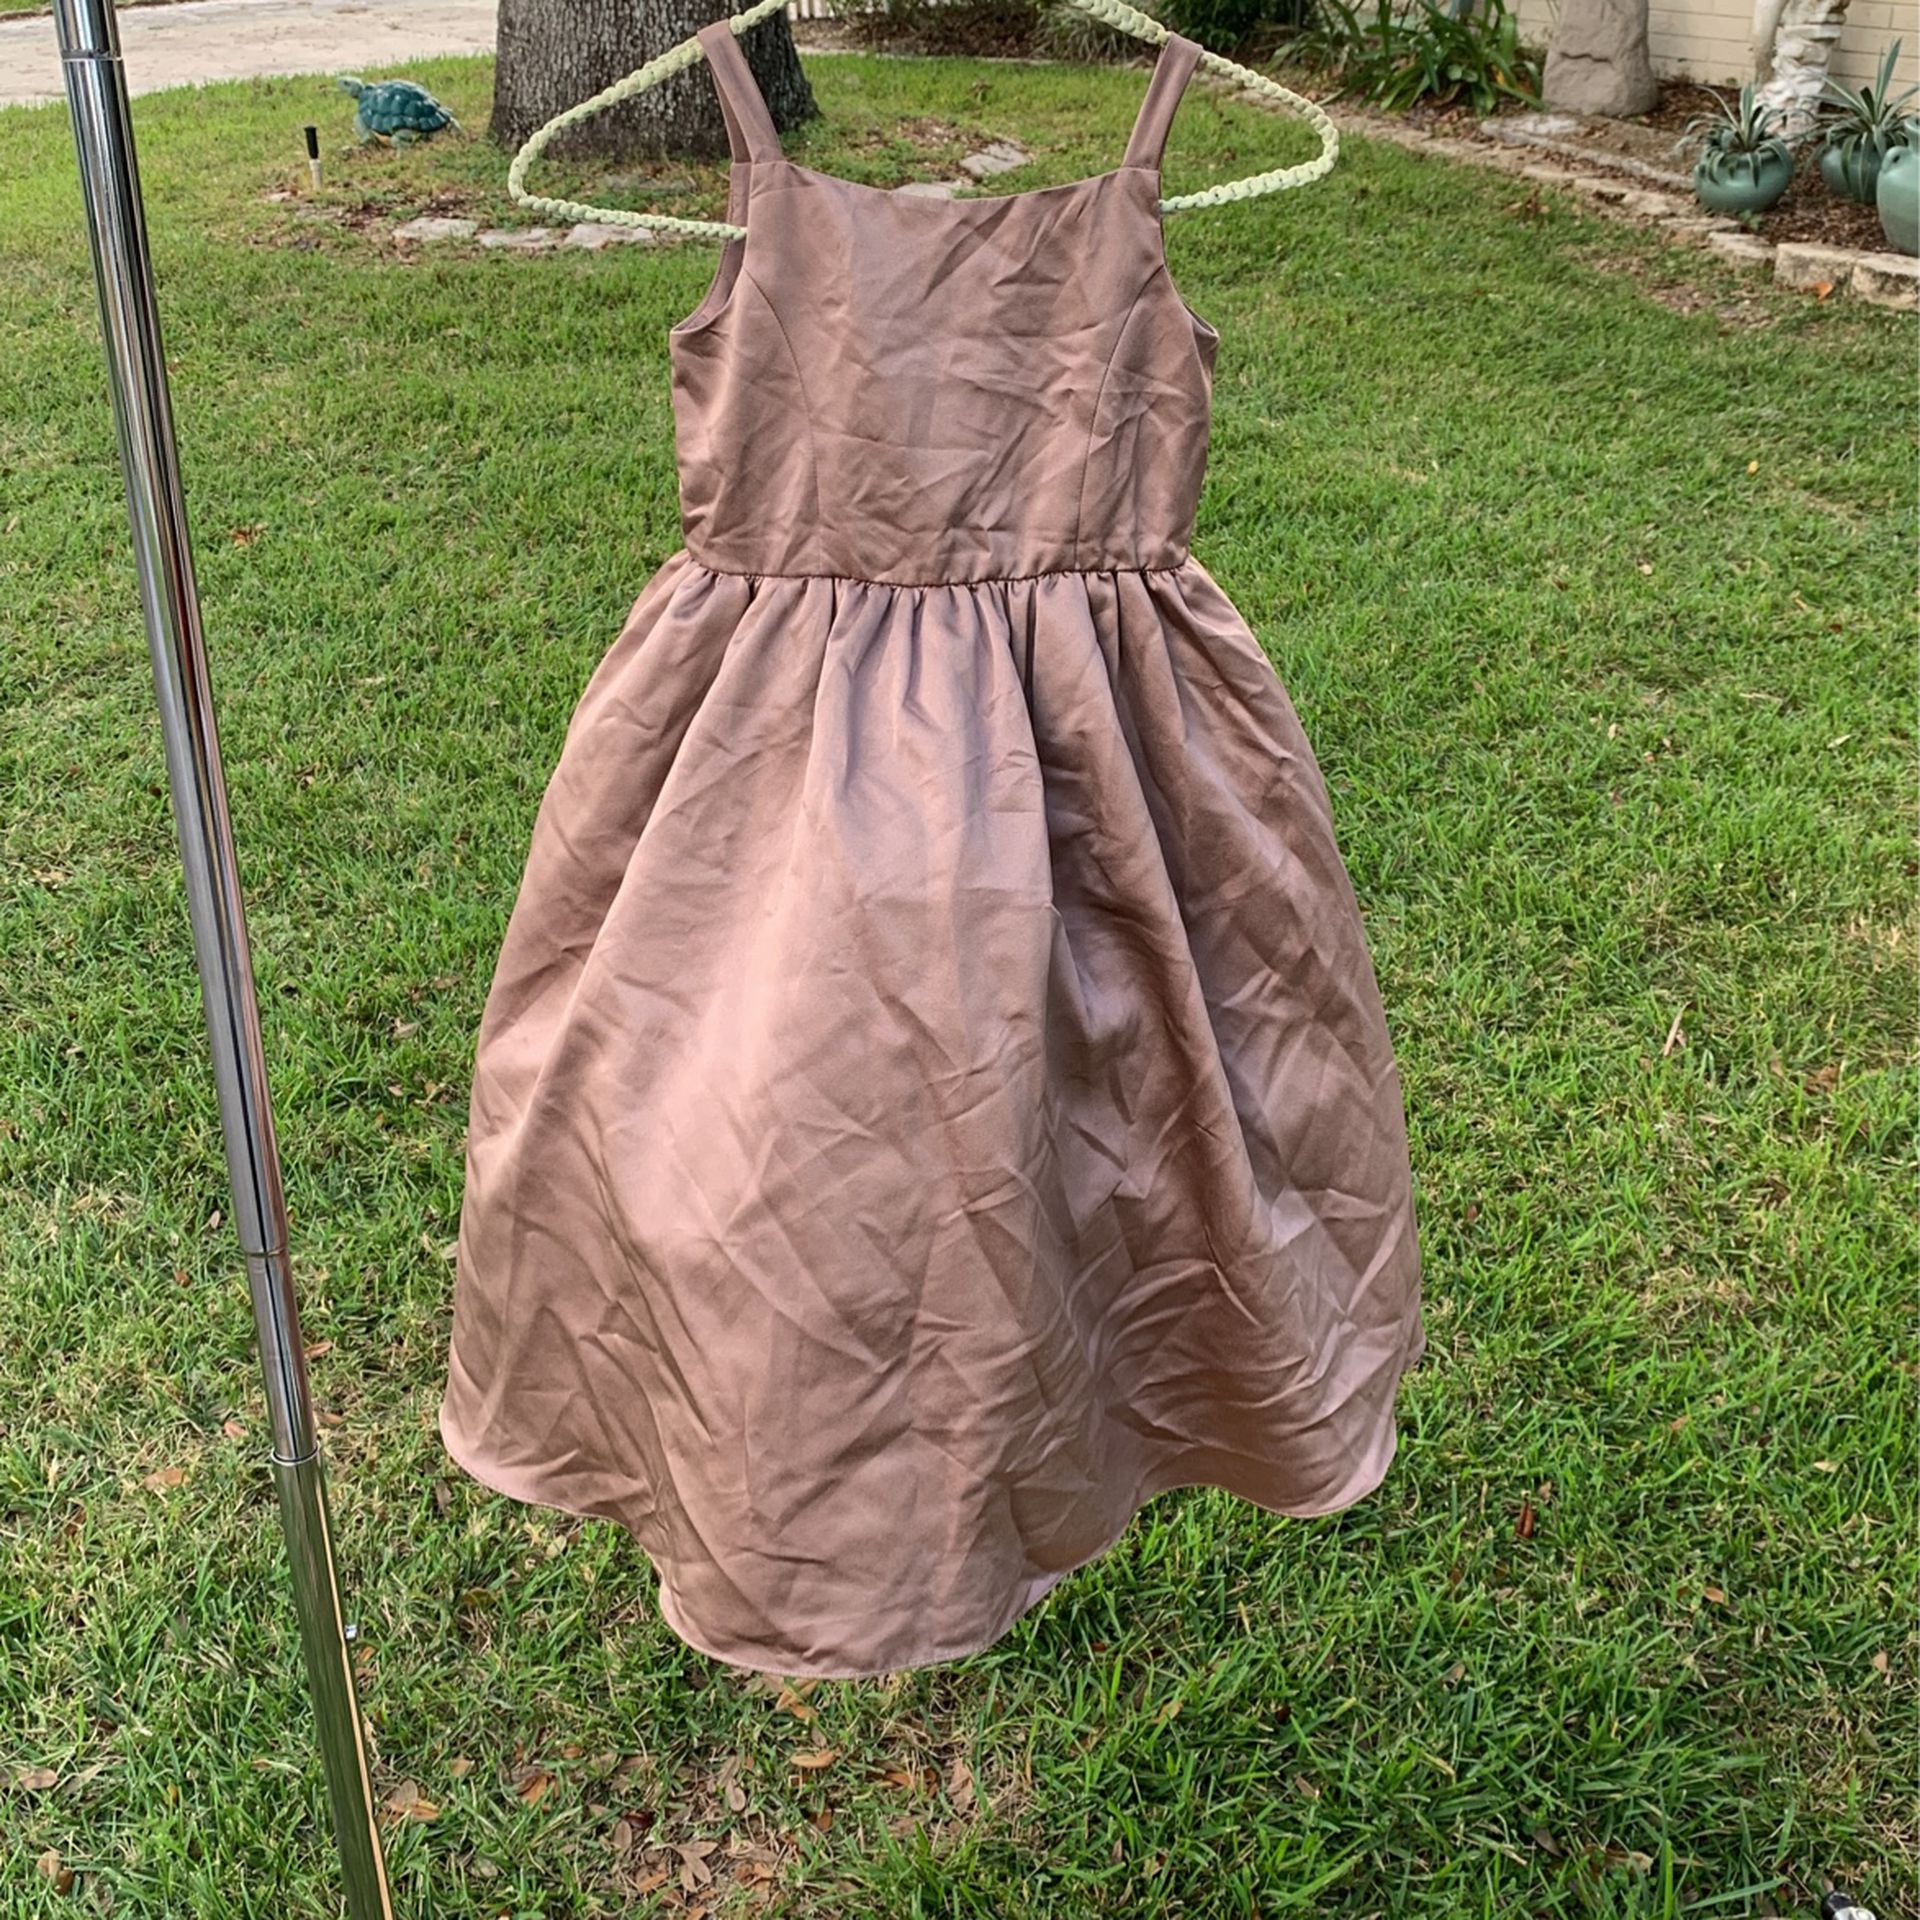 Flower Girl/Princess Formal Dress/Gown - Child Size 5 - Taupe/Satin W/Black Net Crinoline